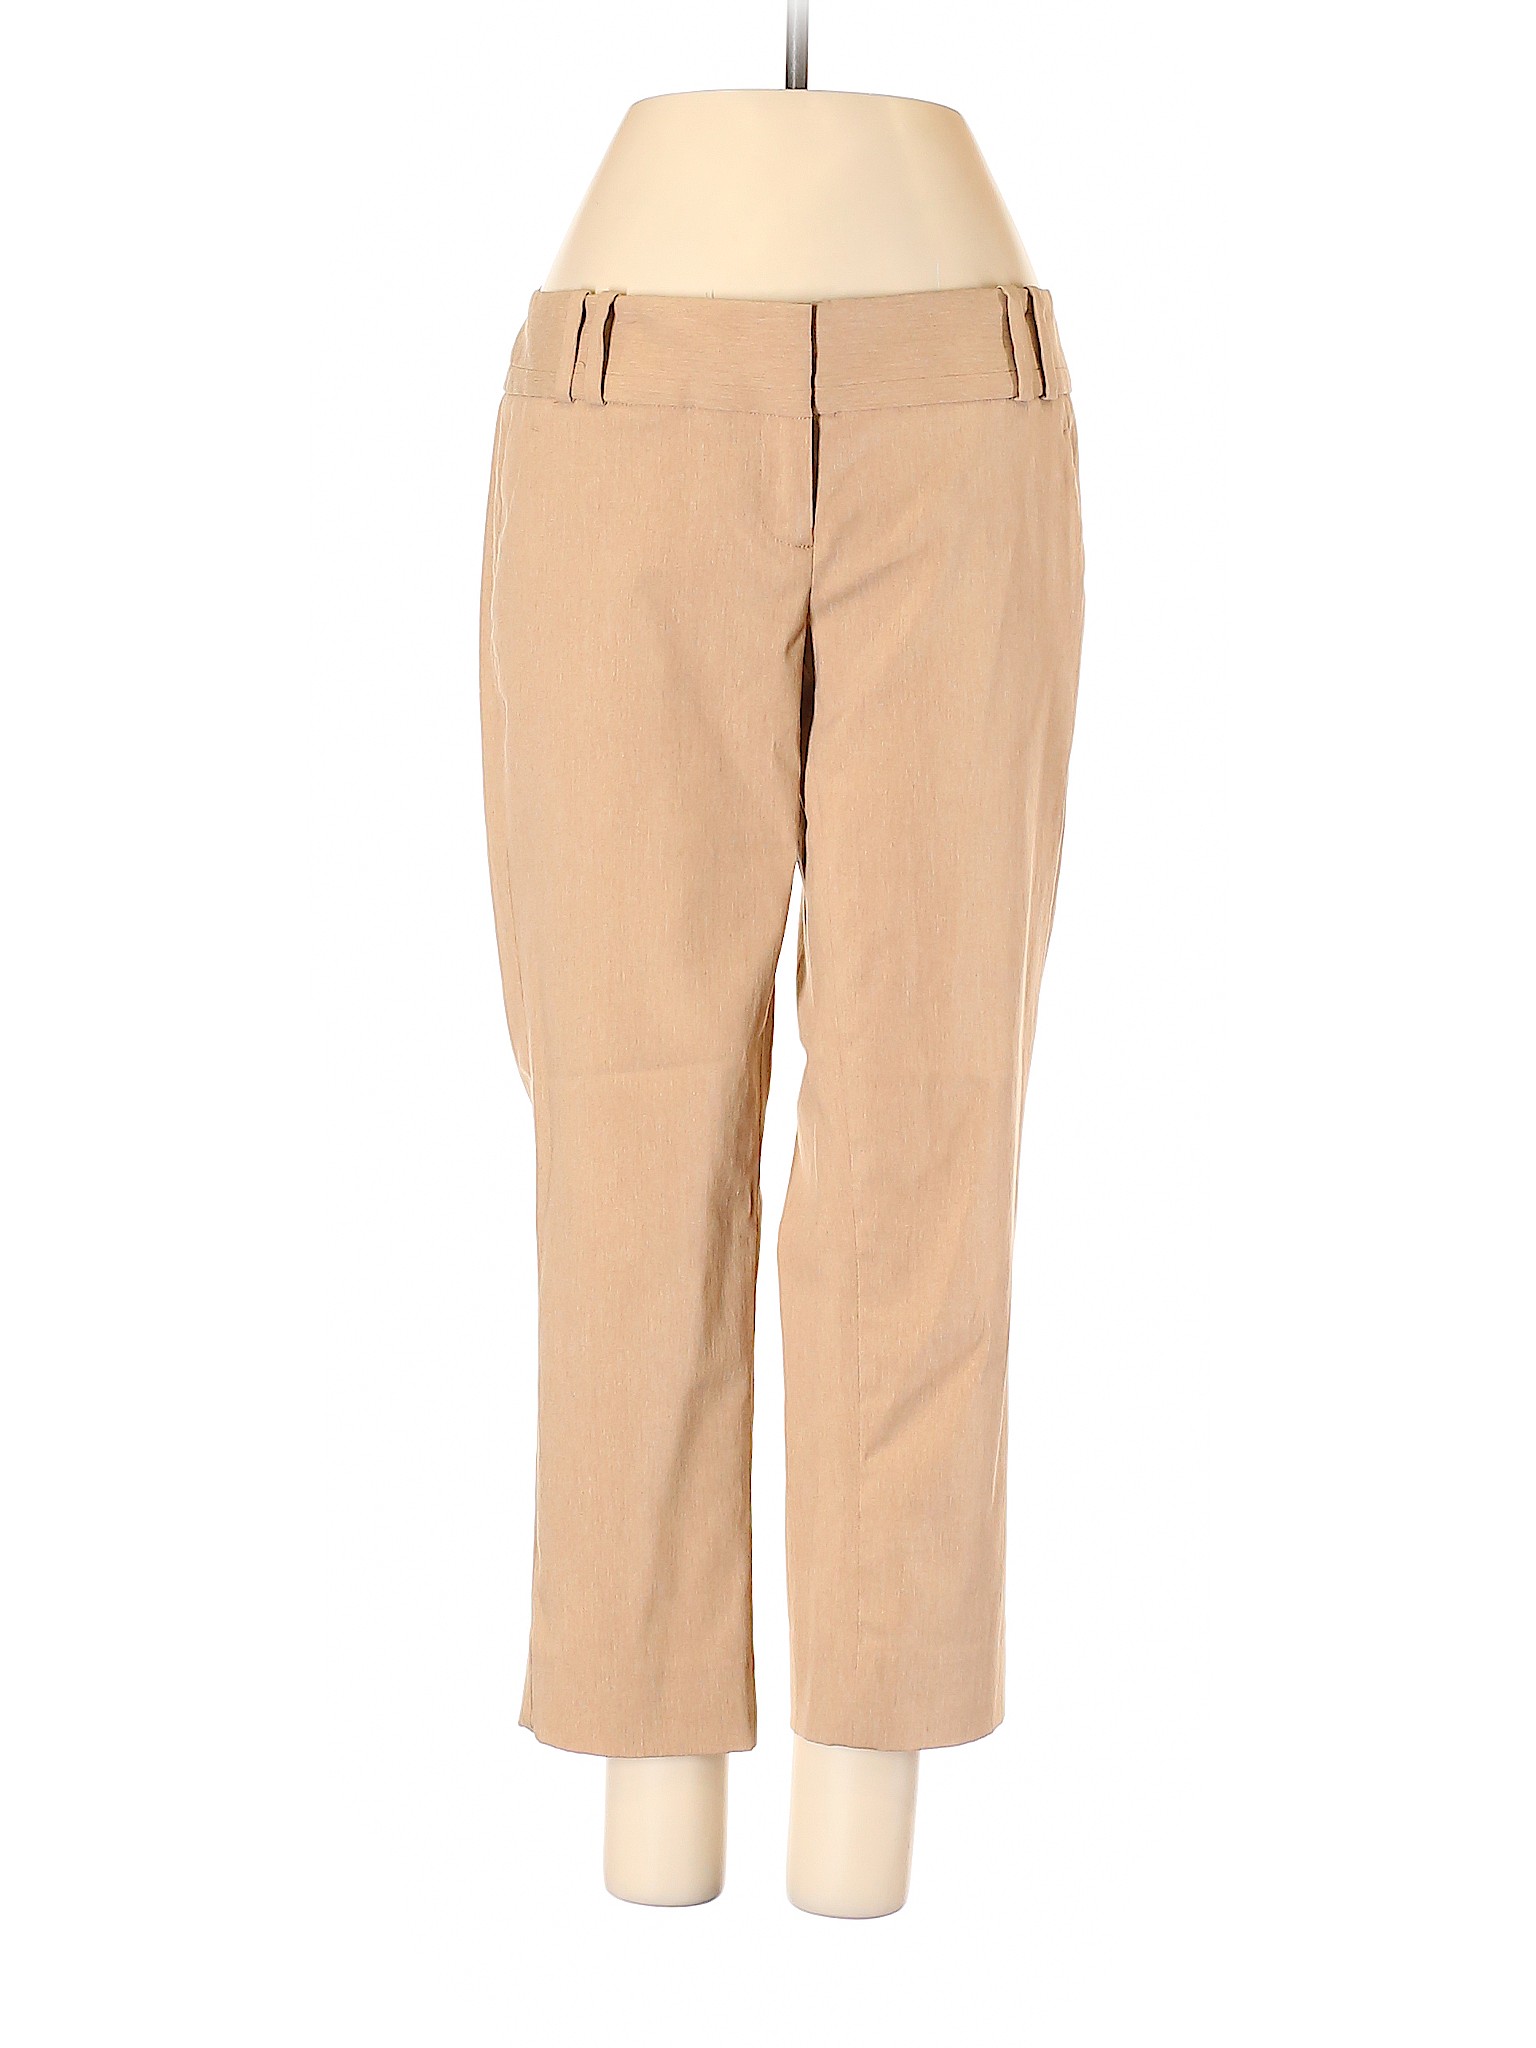 The Limited Women Brown Dress Pants 2 | eBay